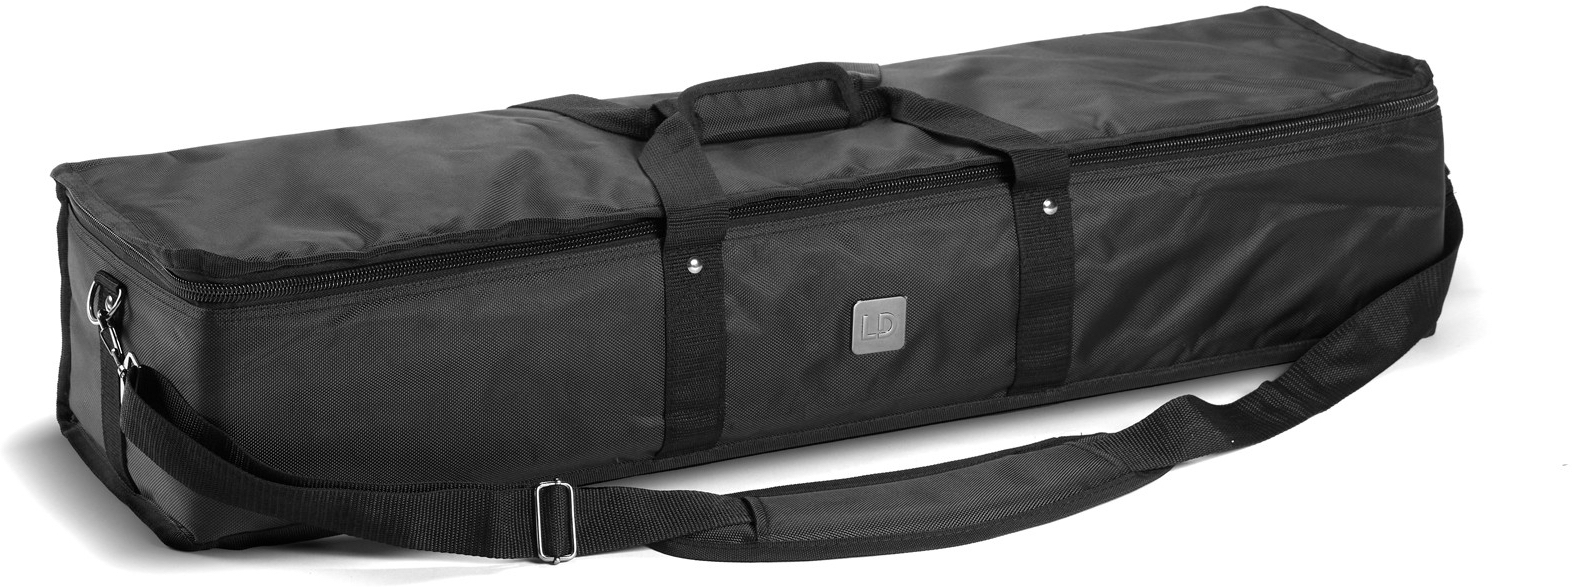 Ld Systems Maui 11 G3 Sat Bag - Tasche für Lautsprecher & Subwoofer - Main picture